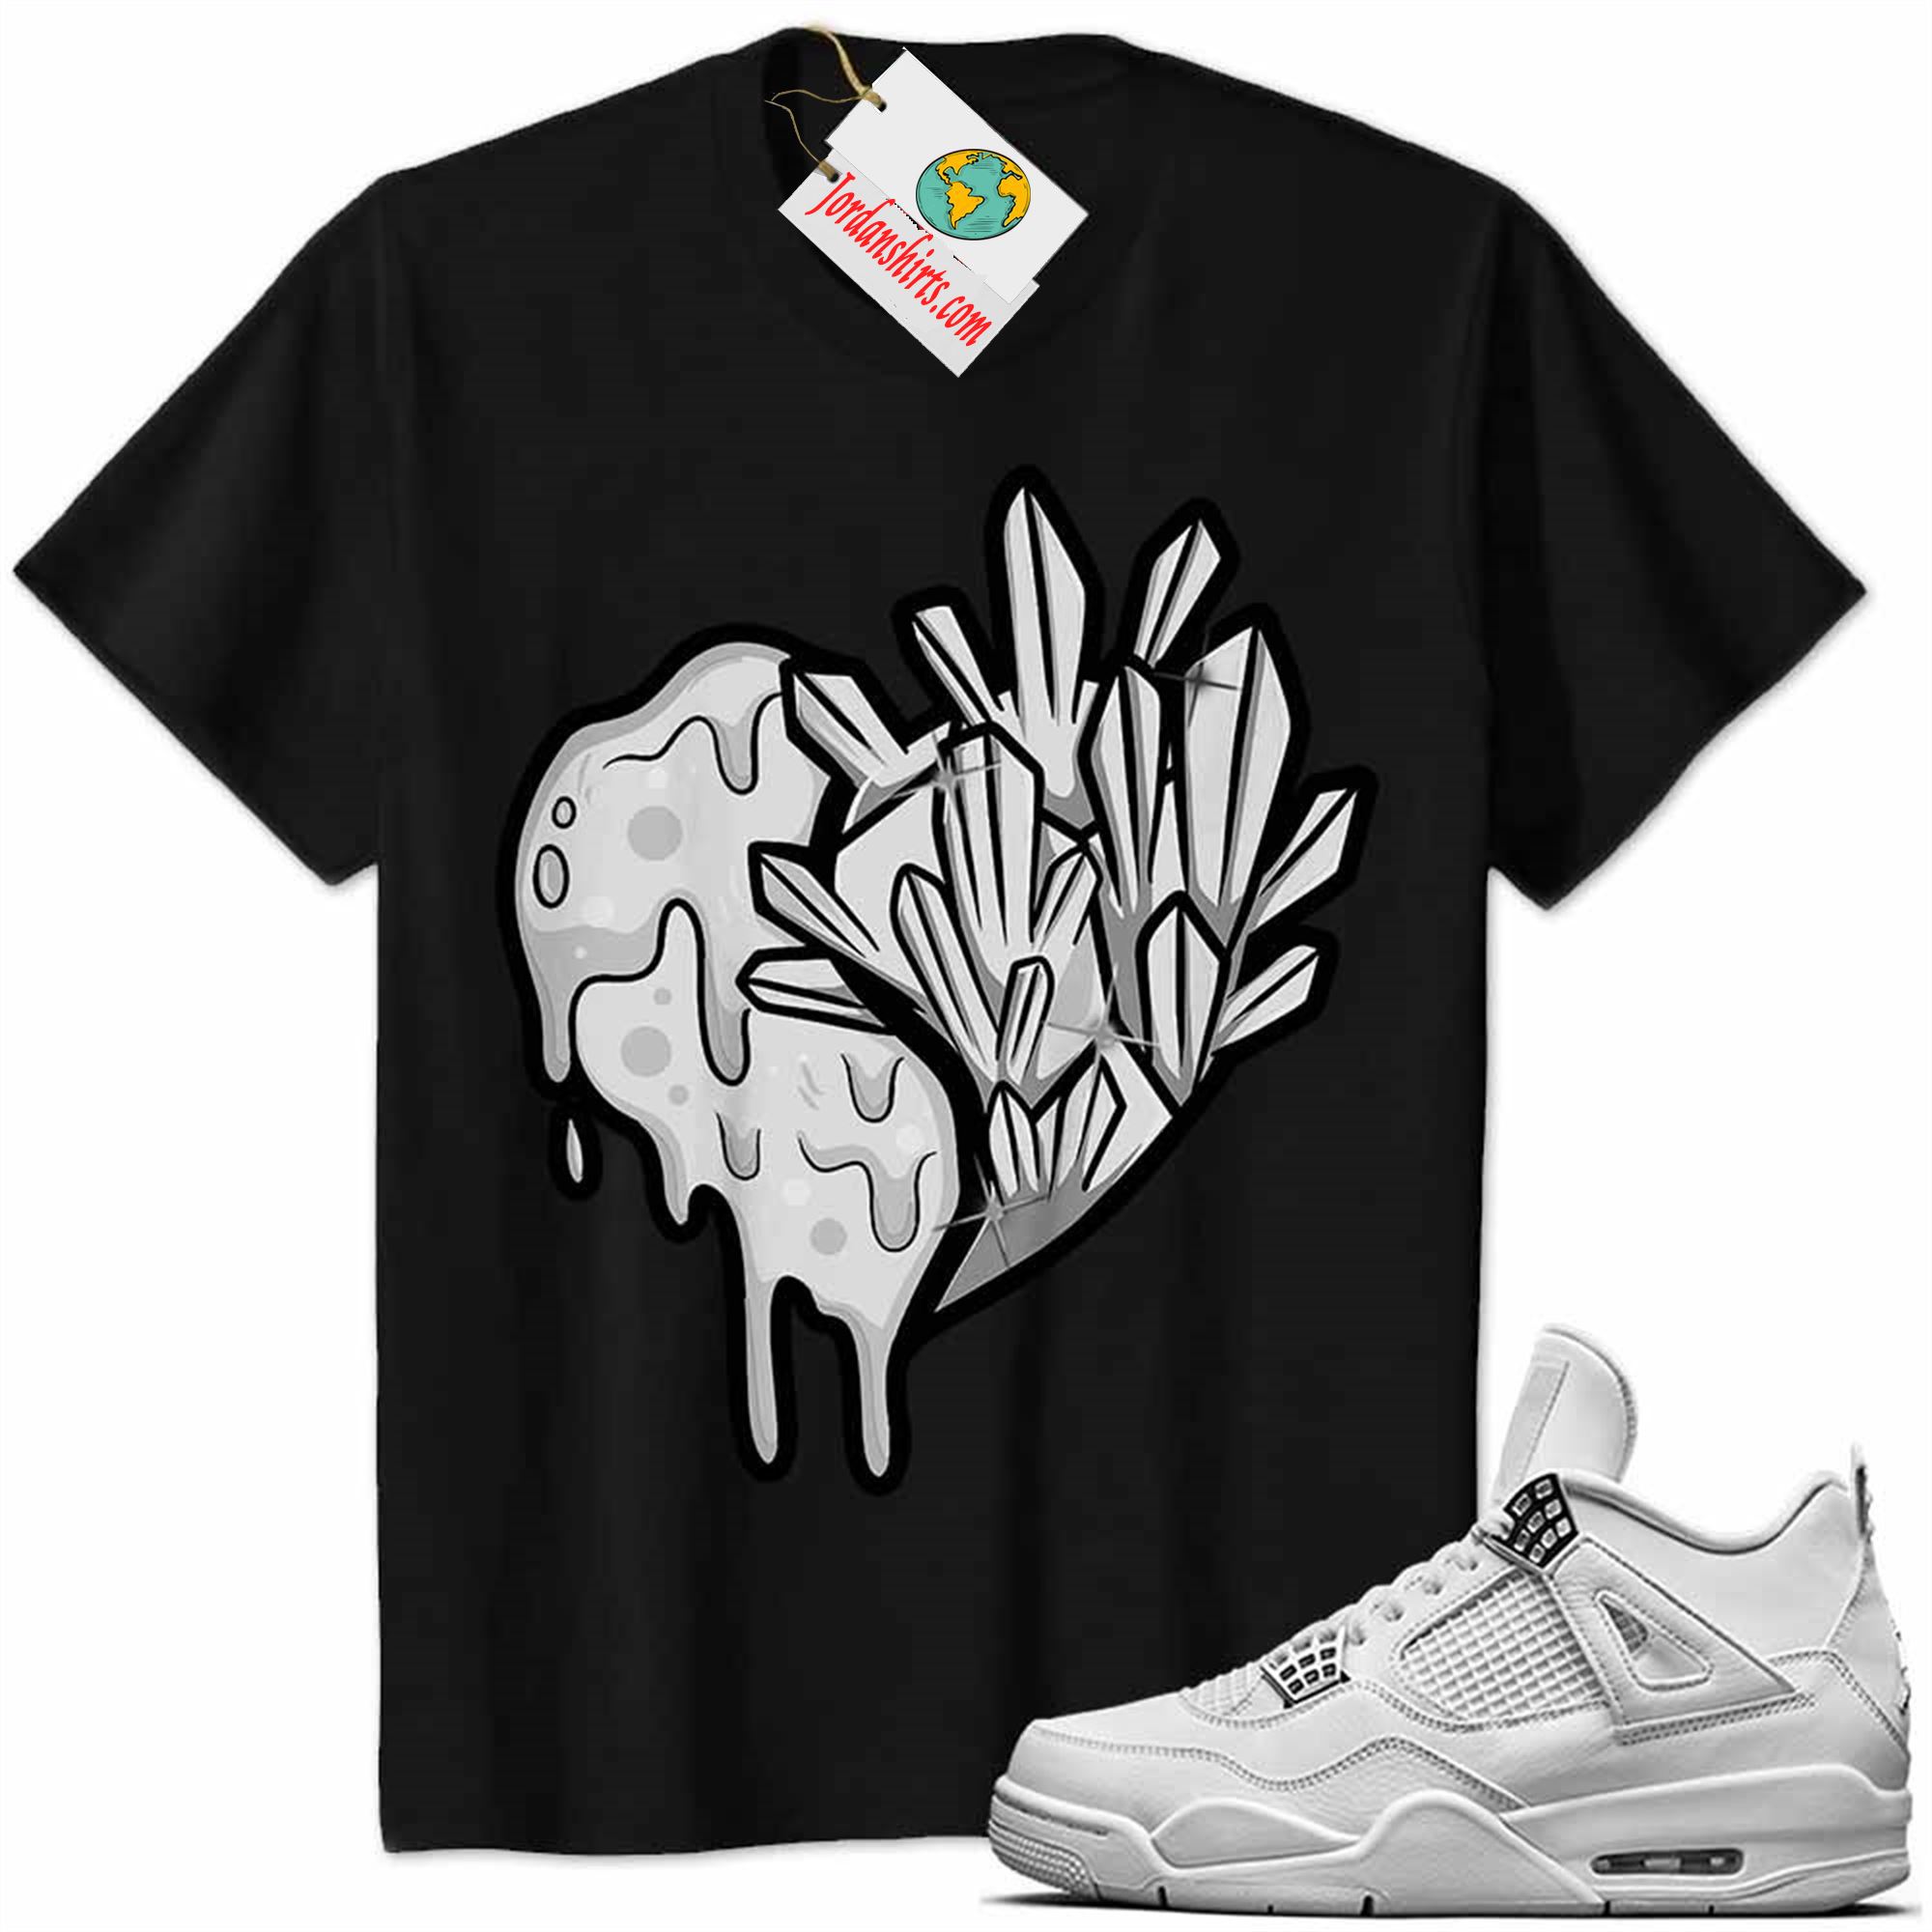 Jordan 4 Shirt, Crystal And Melt Heart Black Air Jordan 4 Pure Money 4s Size Up To 5xl